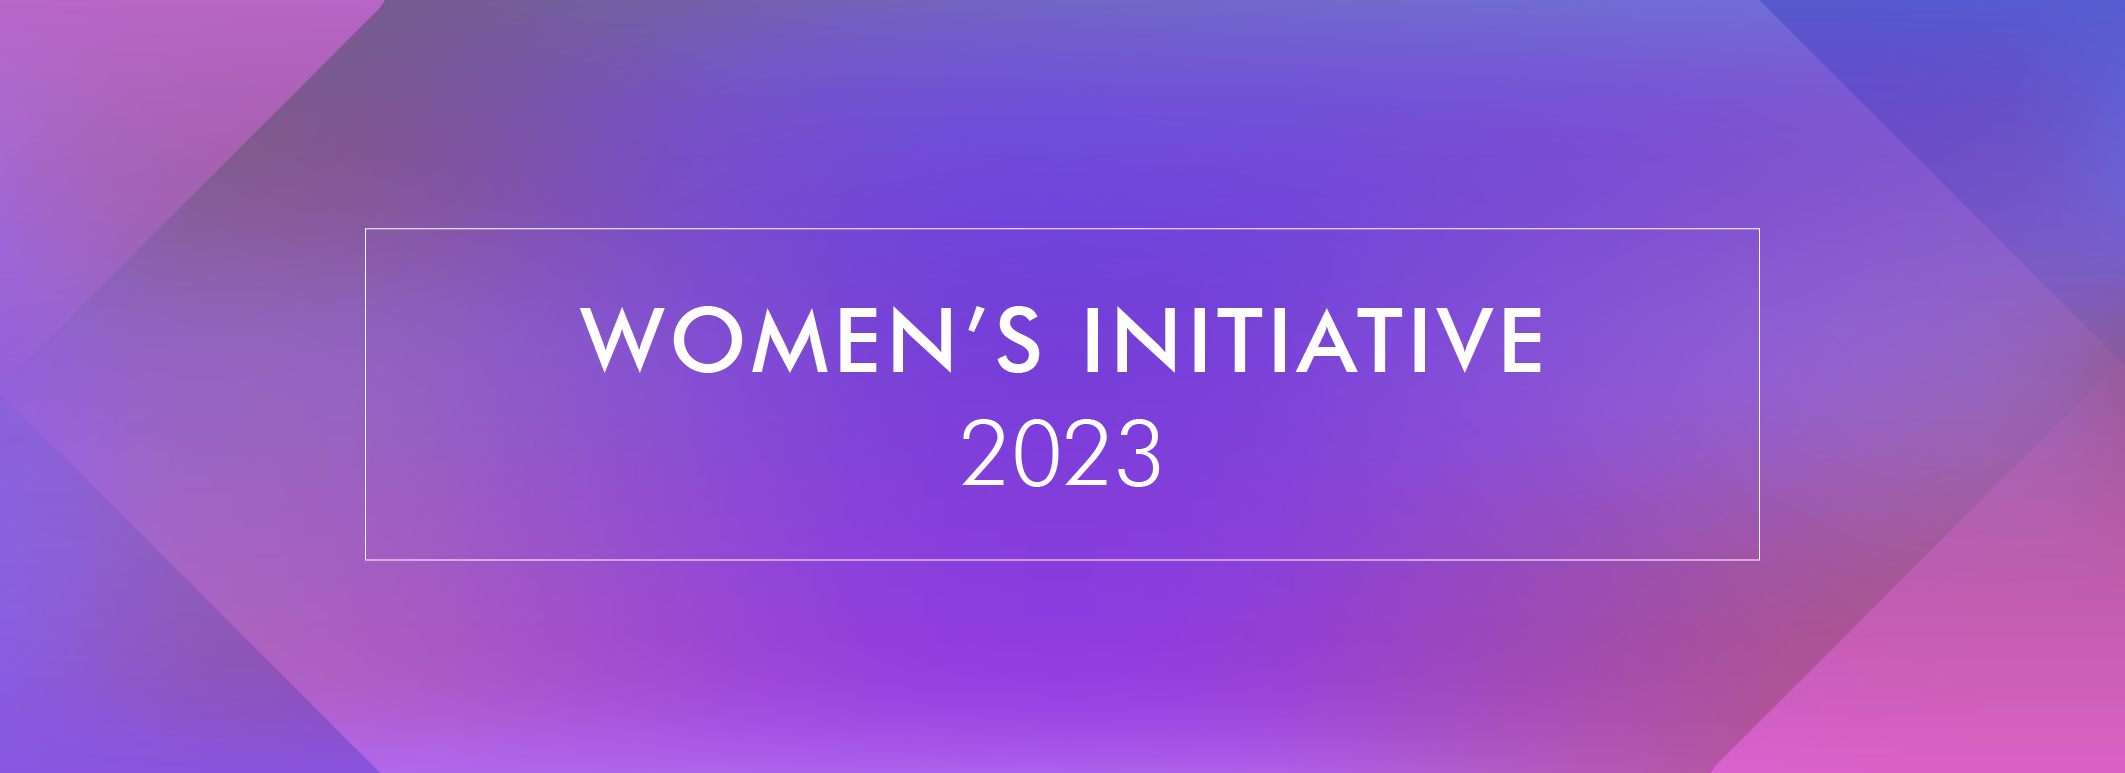 Women's Initiative 2023